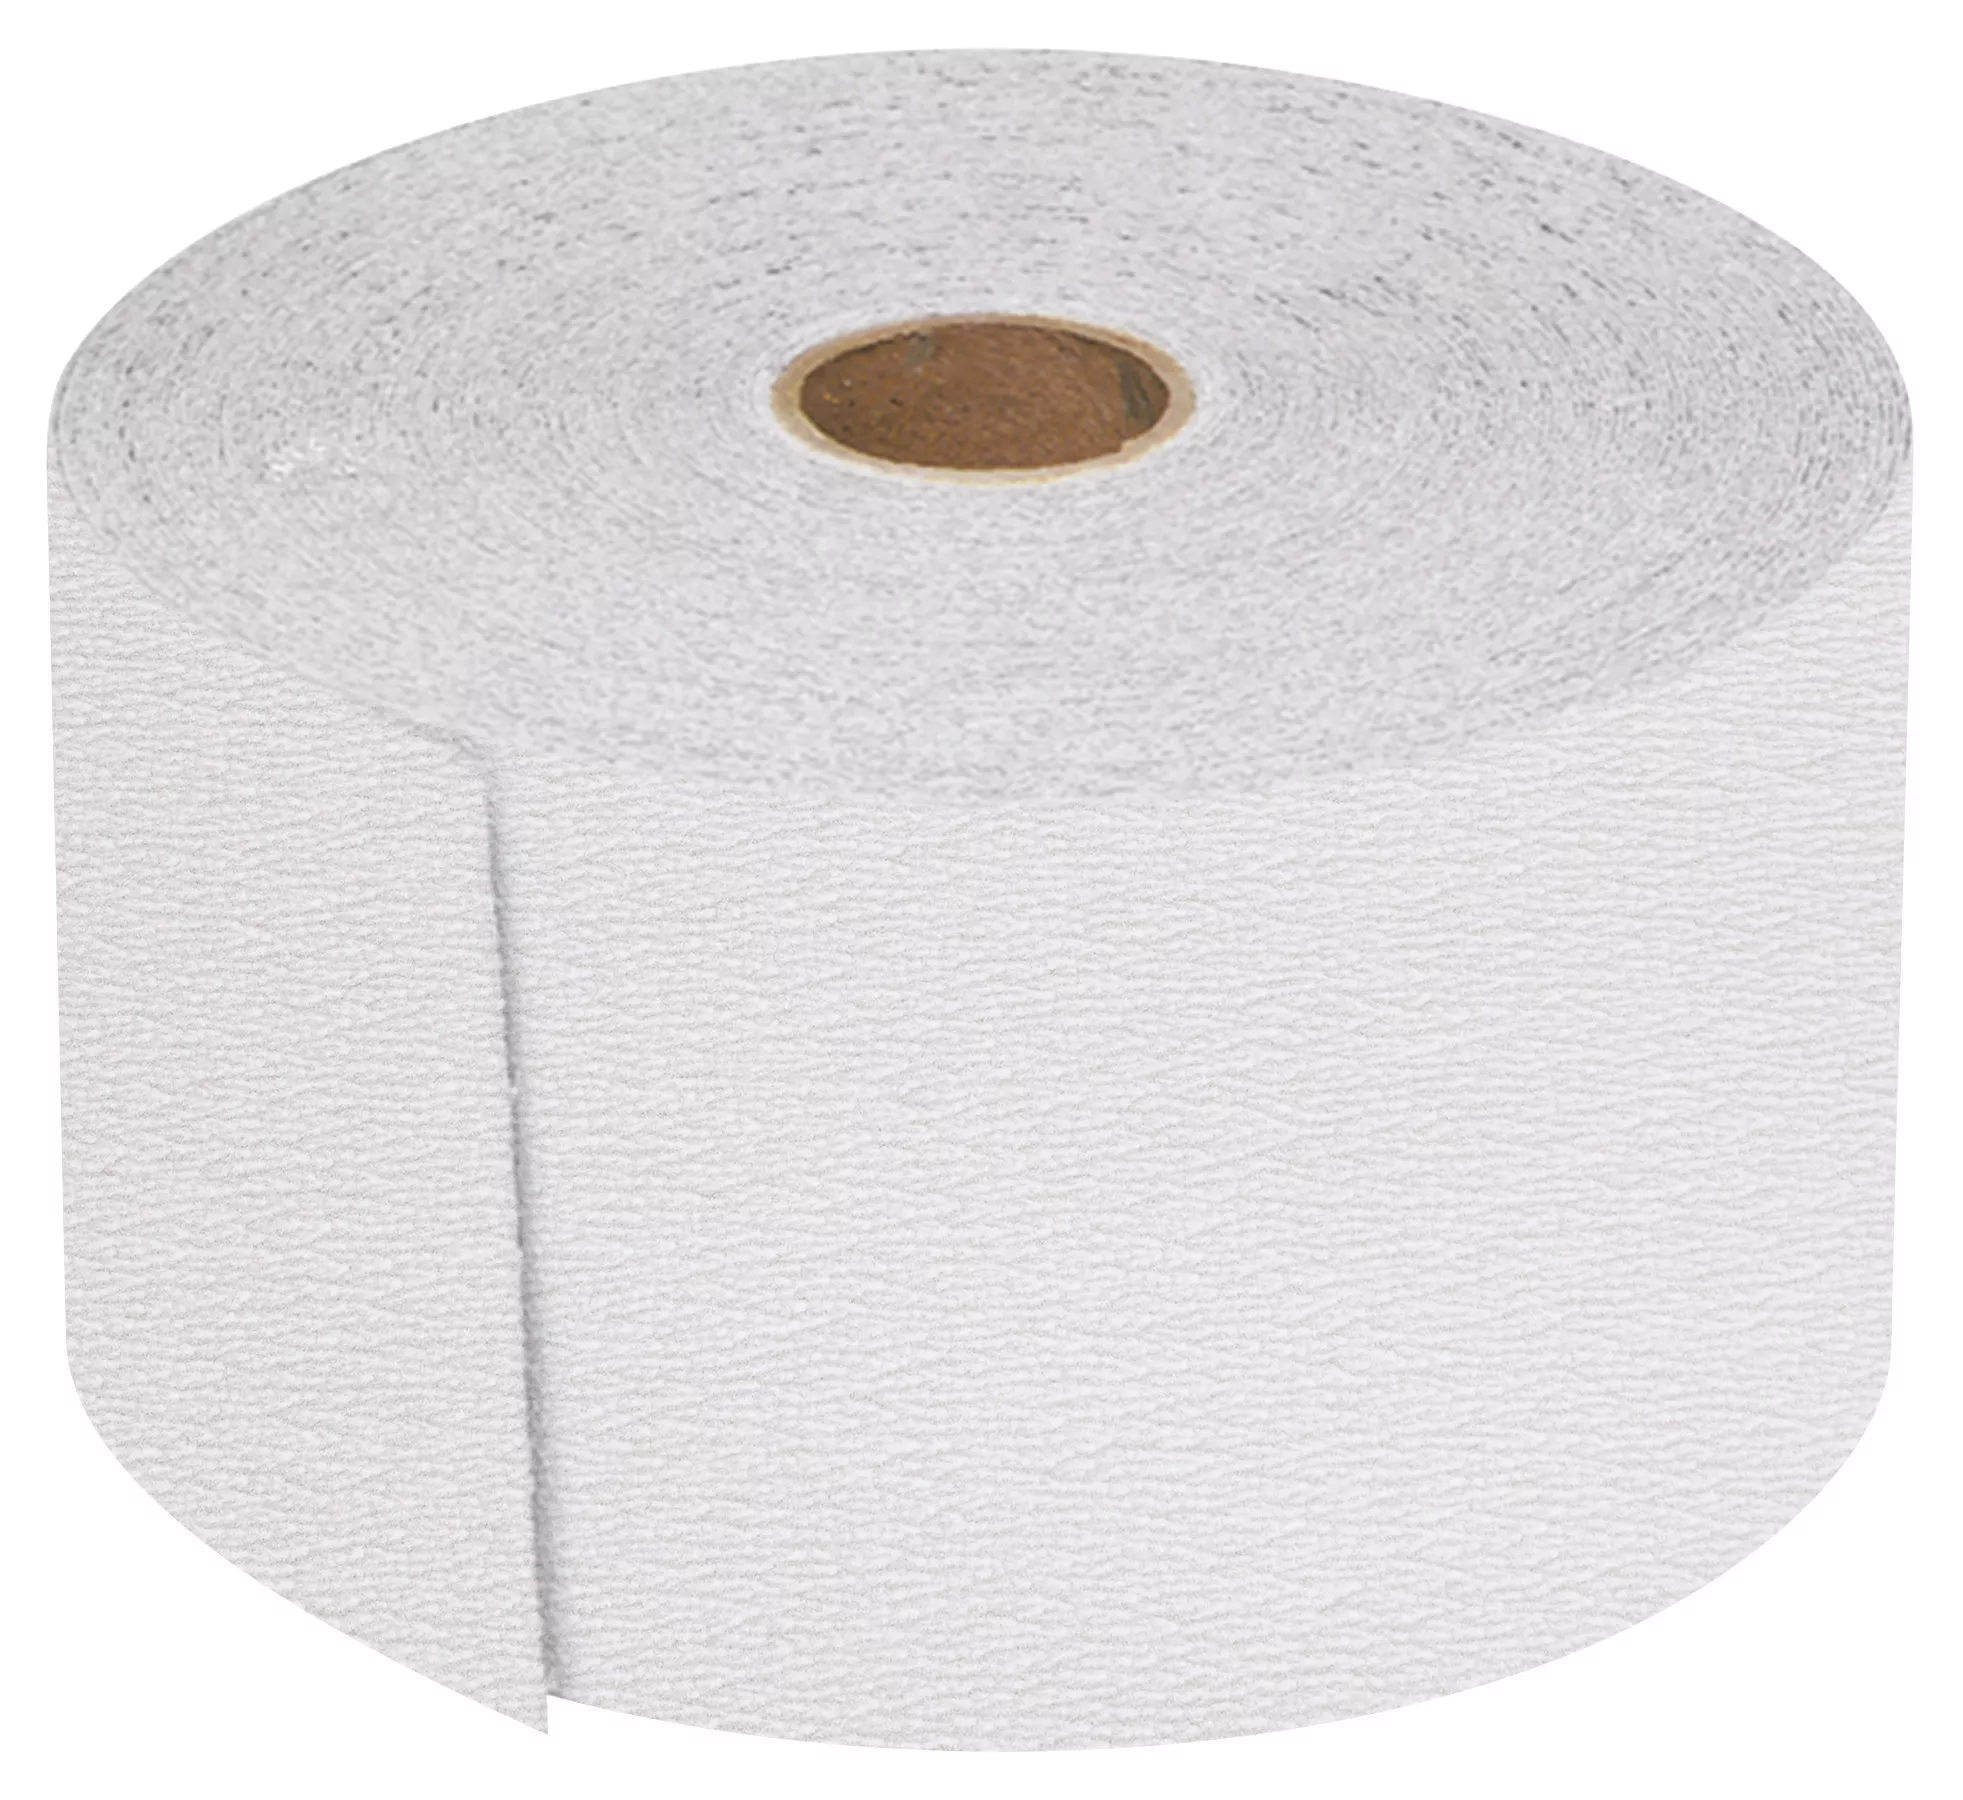 3M™ Stikit™ Paper Roll 426U, 150 A-weight, 3-1/2 in x 50 yd, ASO,
Full-flex